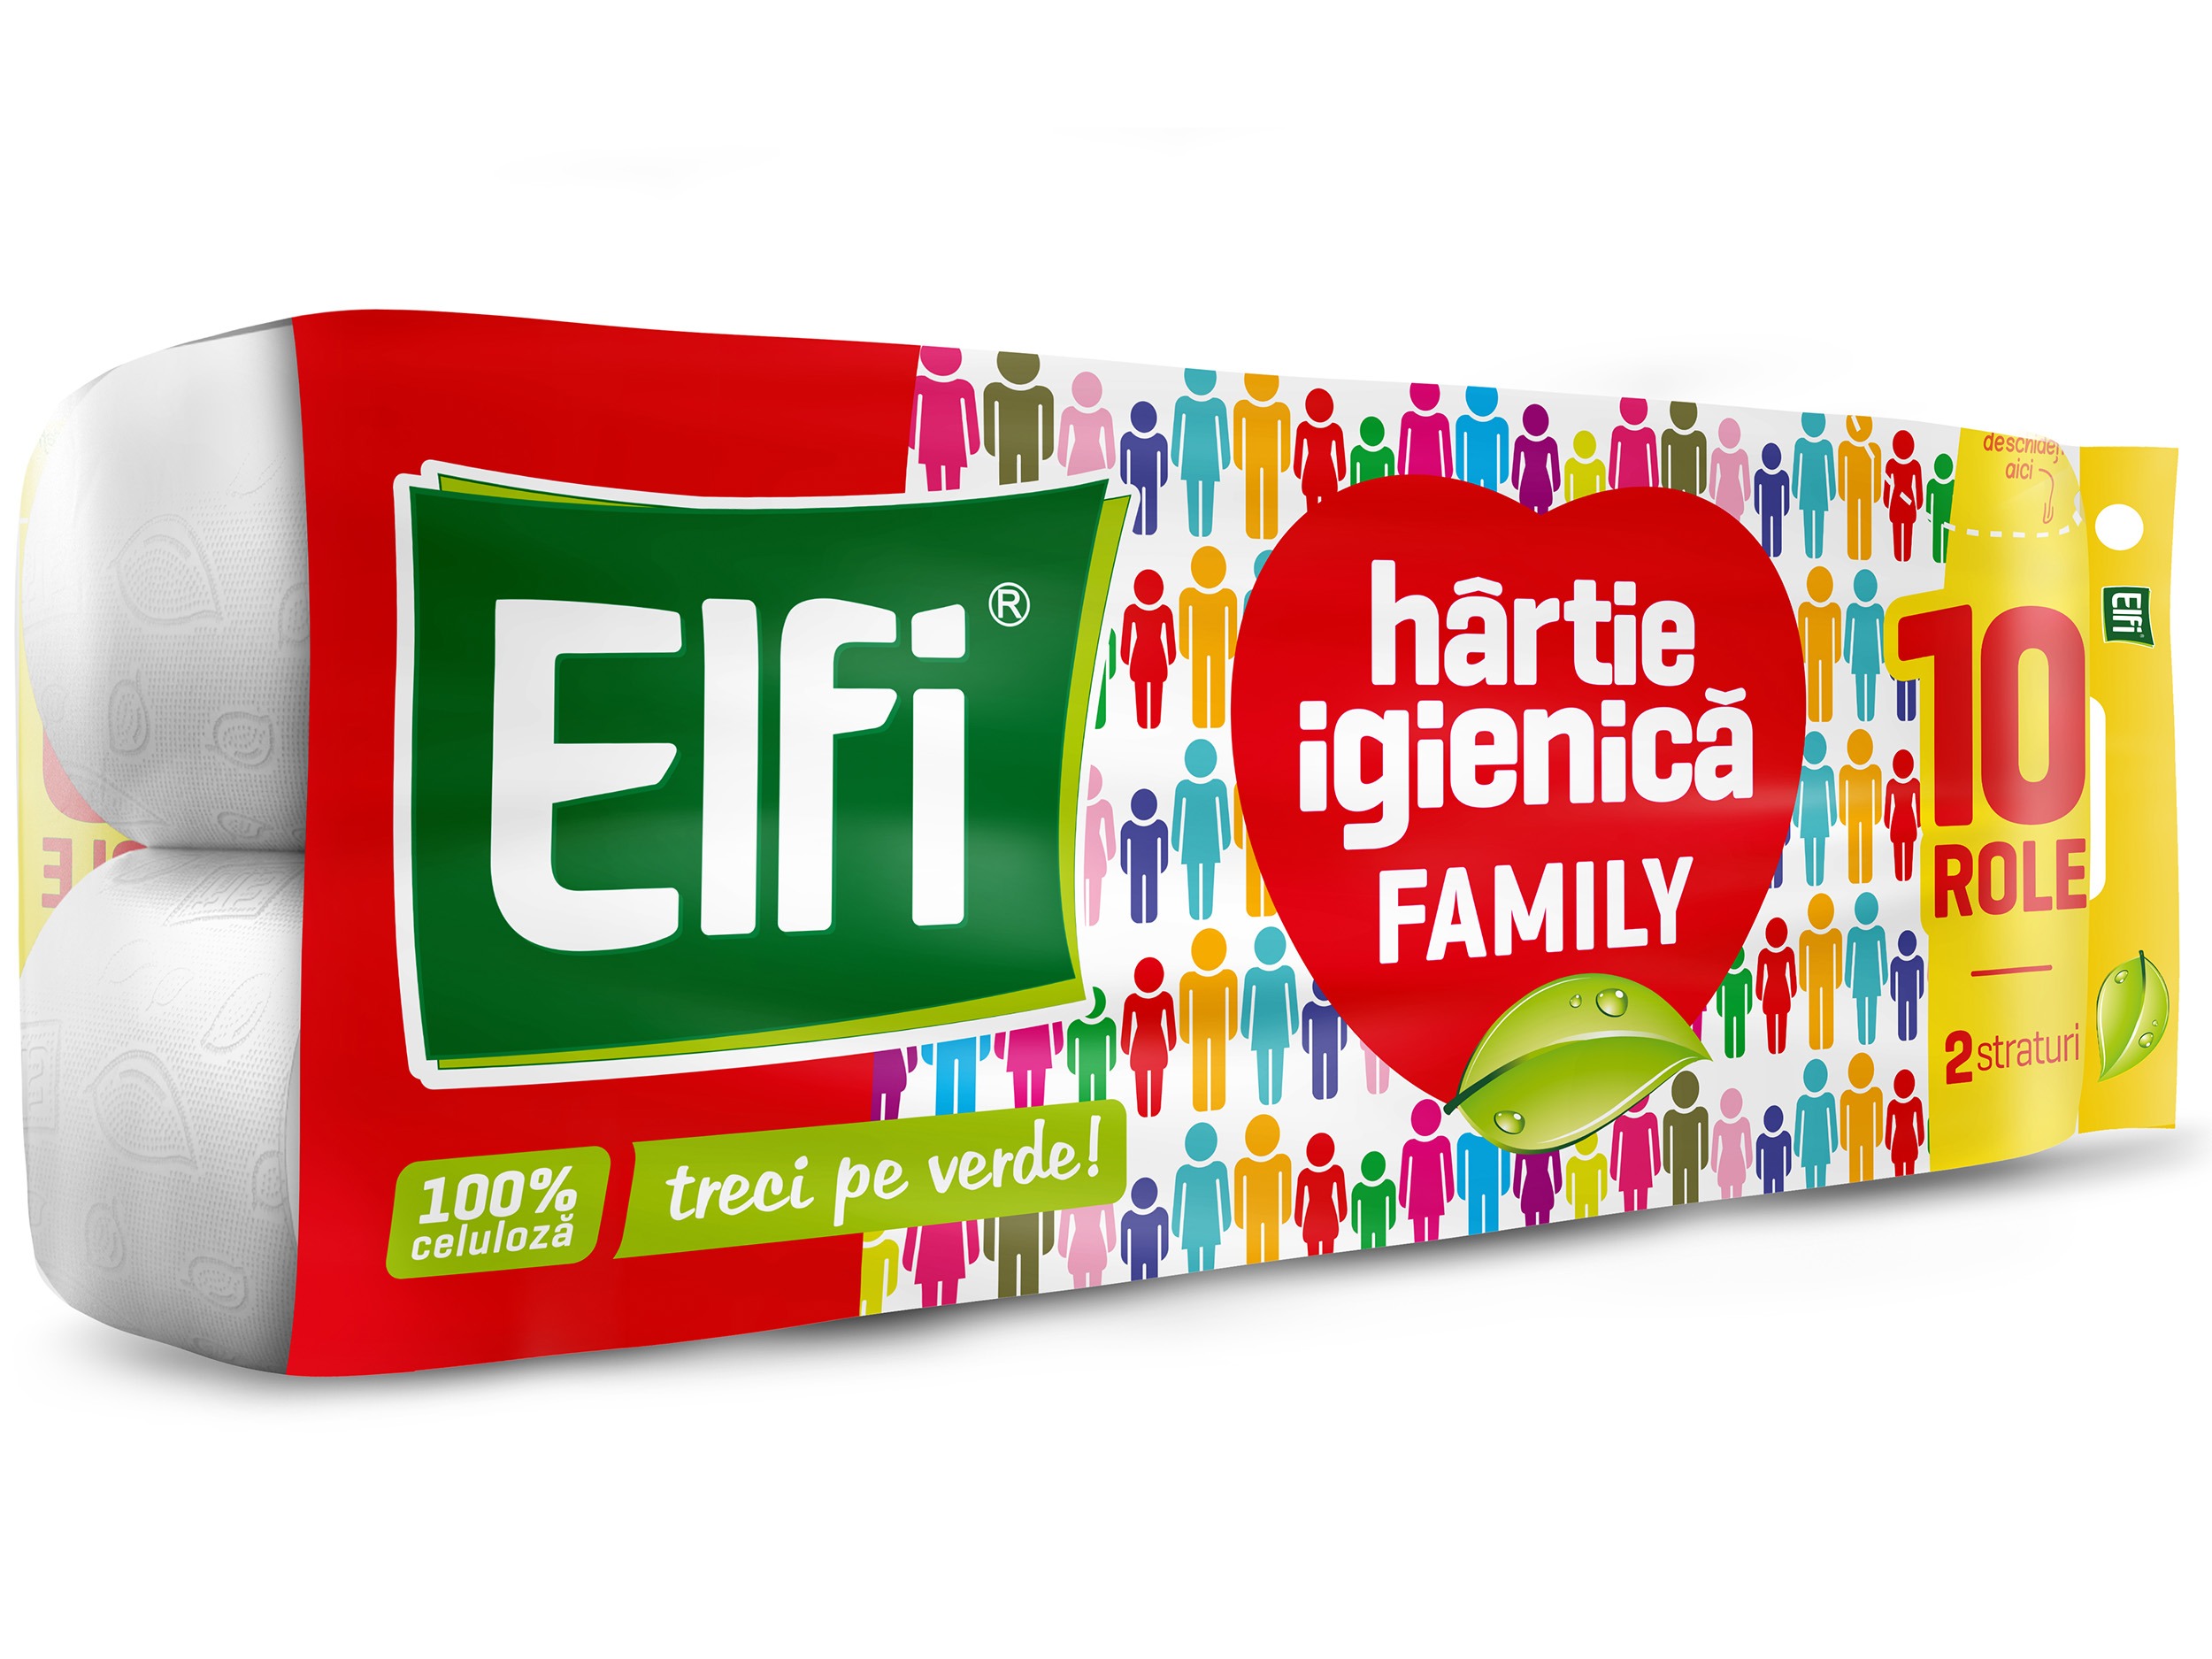 Hartie igienica - ELFI HARTIE IGIENICA DIF SORT 2 STR 10ROLE/SET 8SET/BAX, lucidiusmarket.ro